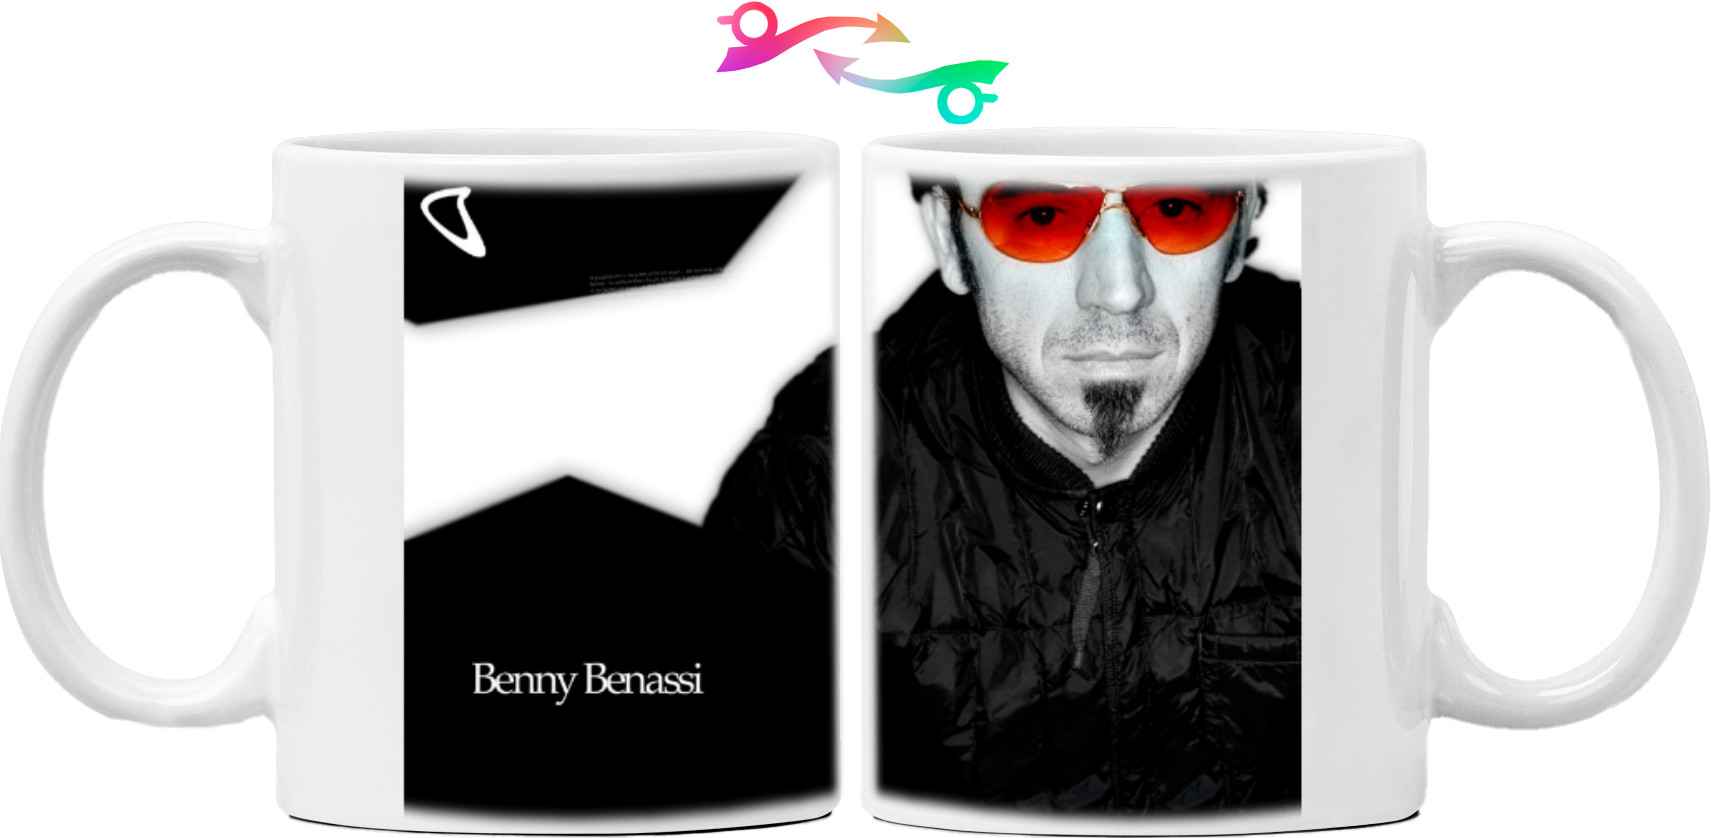 Benny Benassi-2